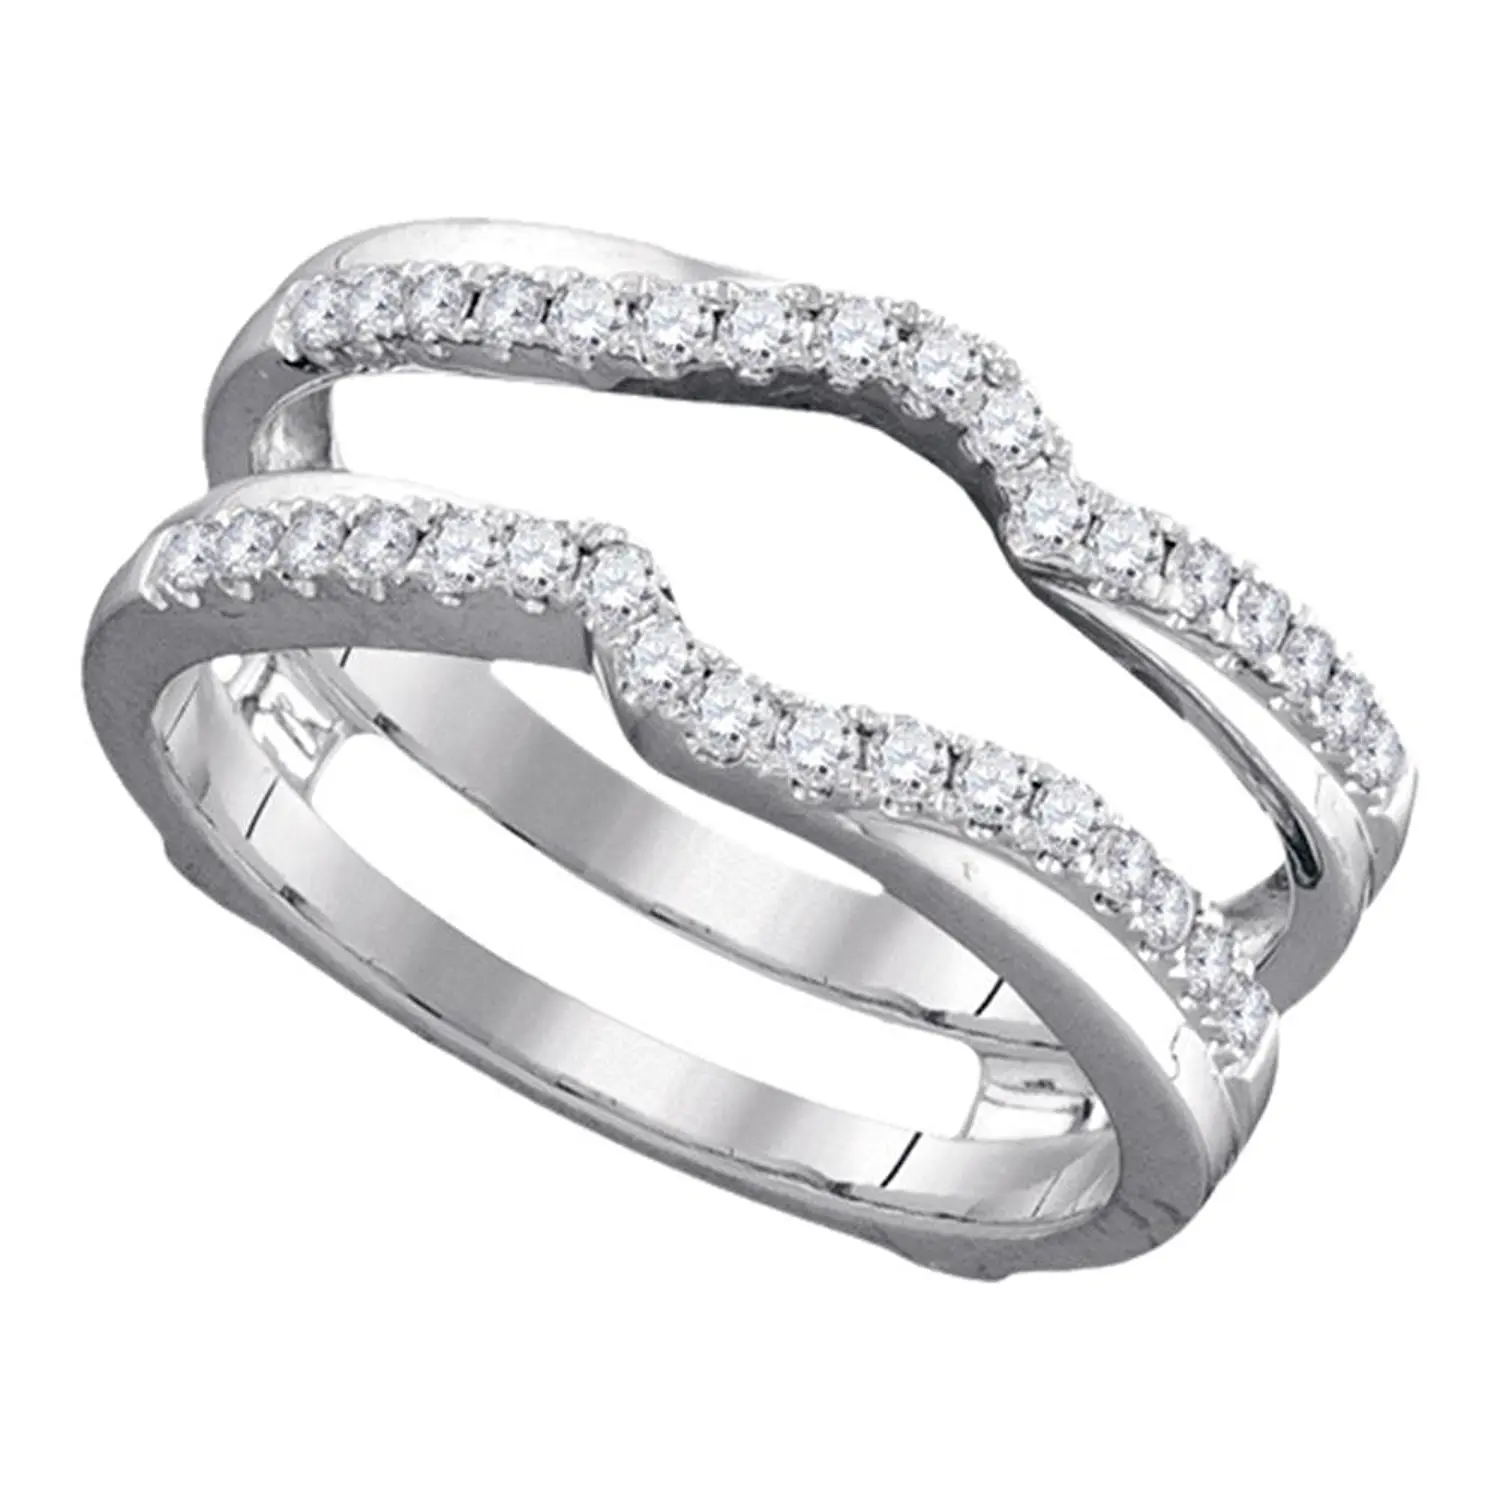 Buy 14kt White Gold Womens Round Diamond Ring Guard Wrap